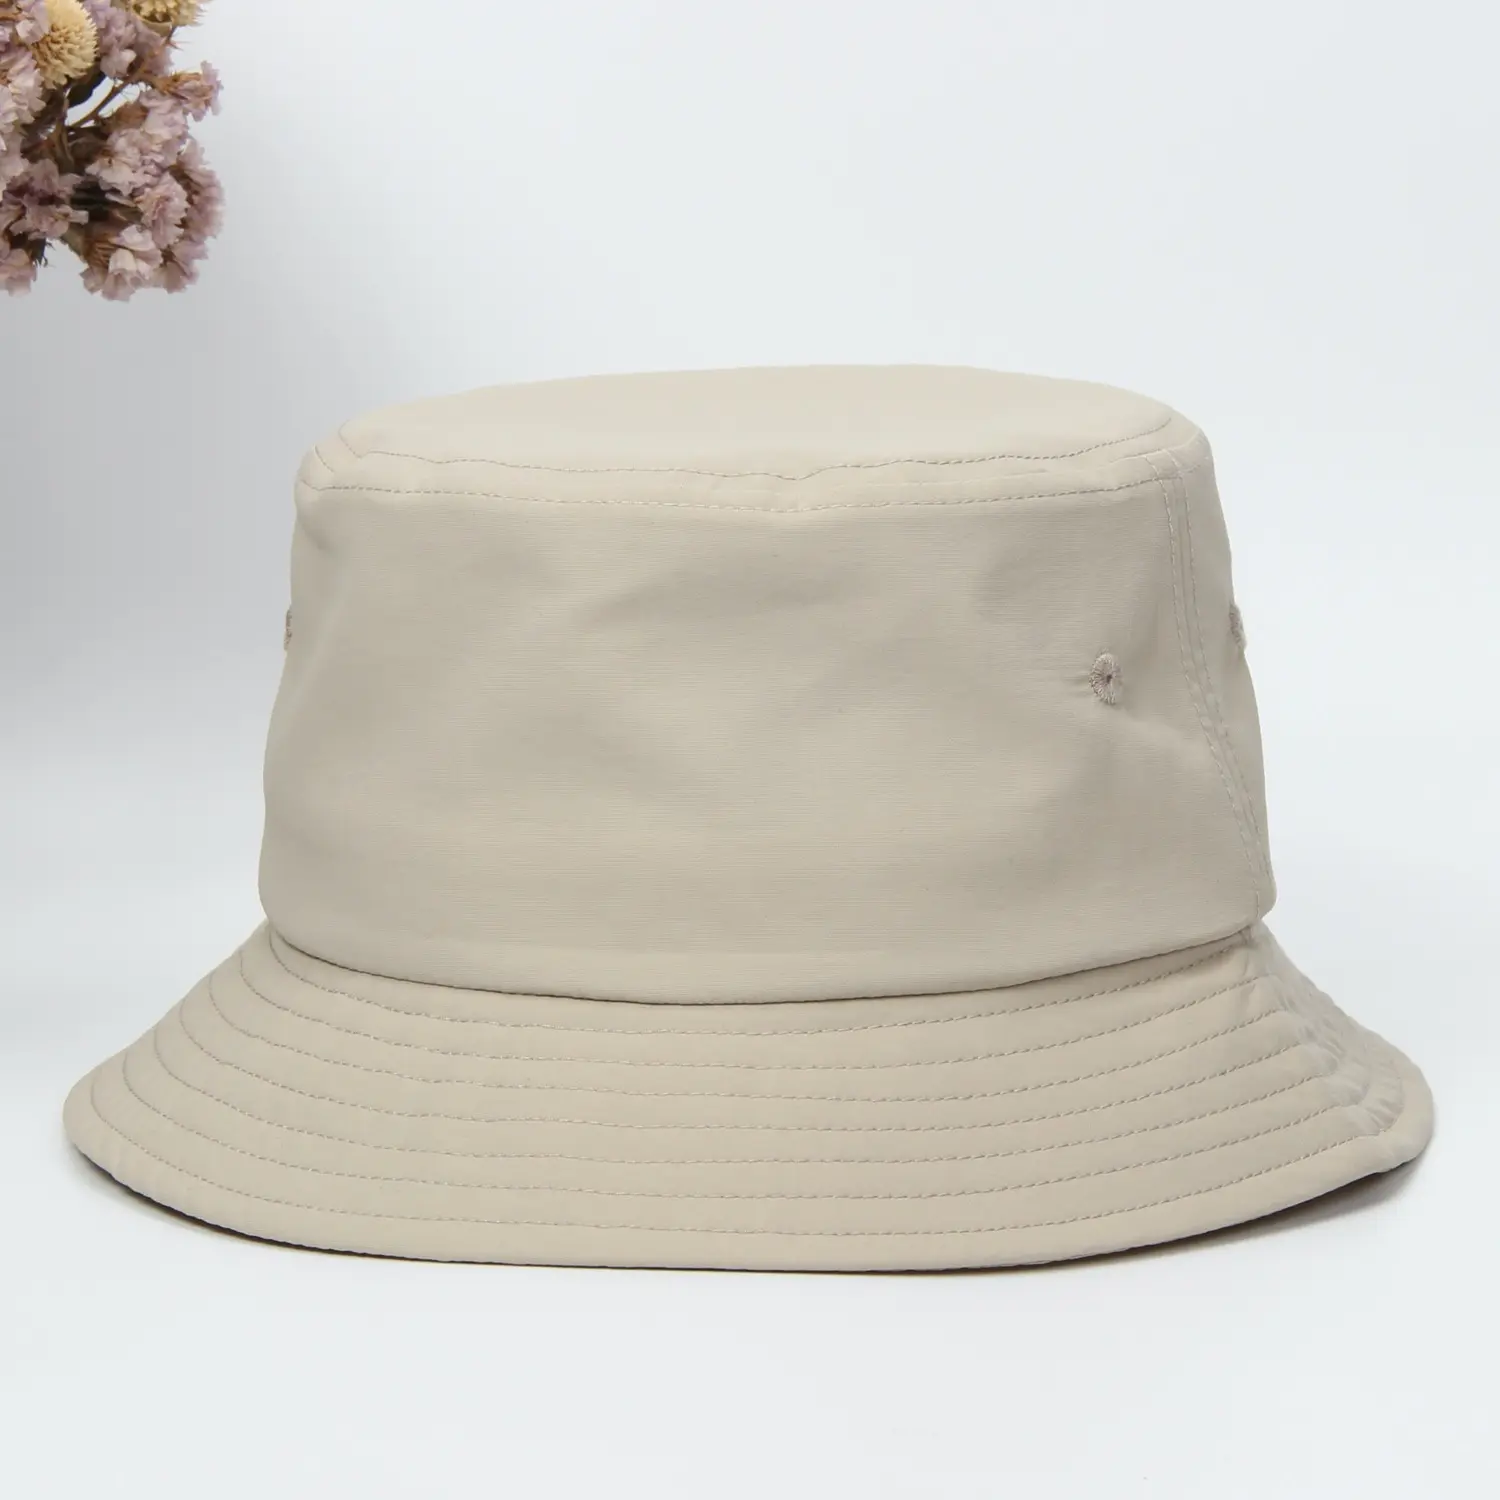 Nylon Fabric Waterproof Bucket hat Summer fisherman hat Fashion Blank Bucket Hats quick dry